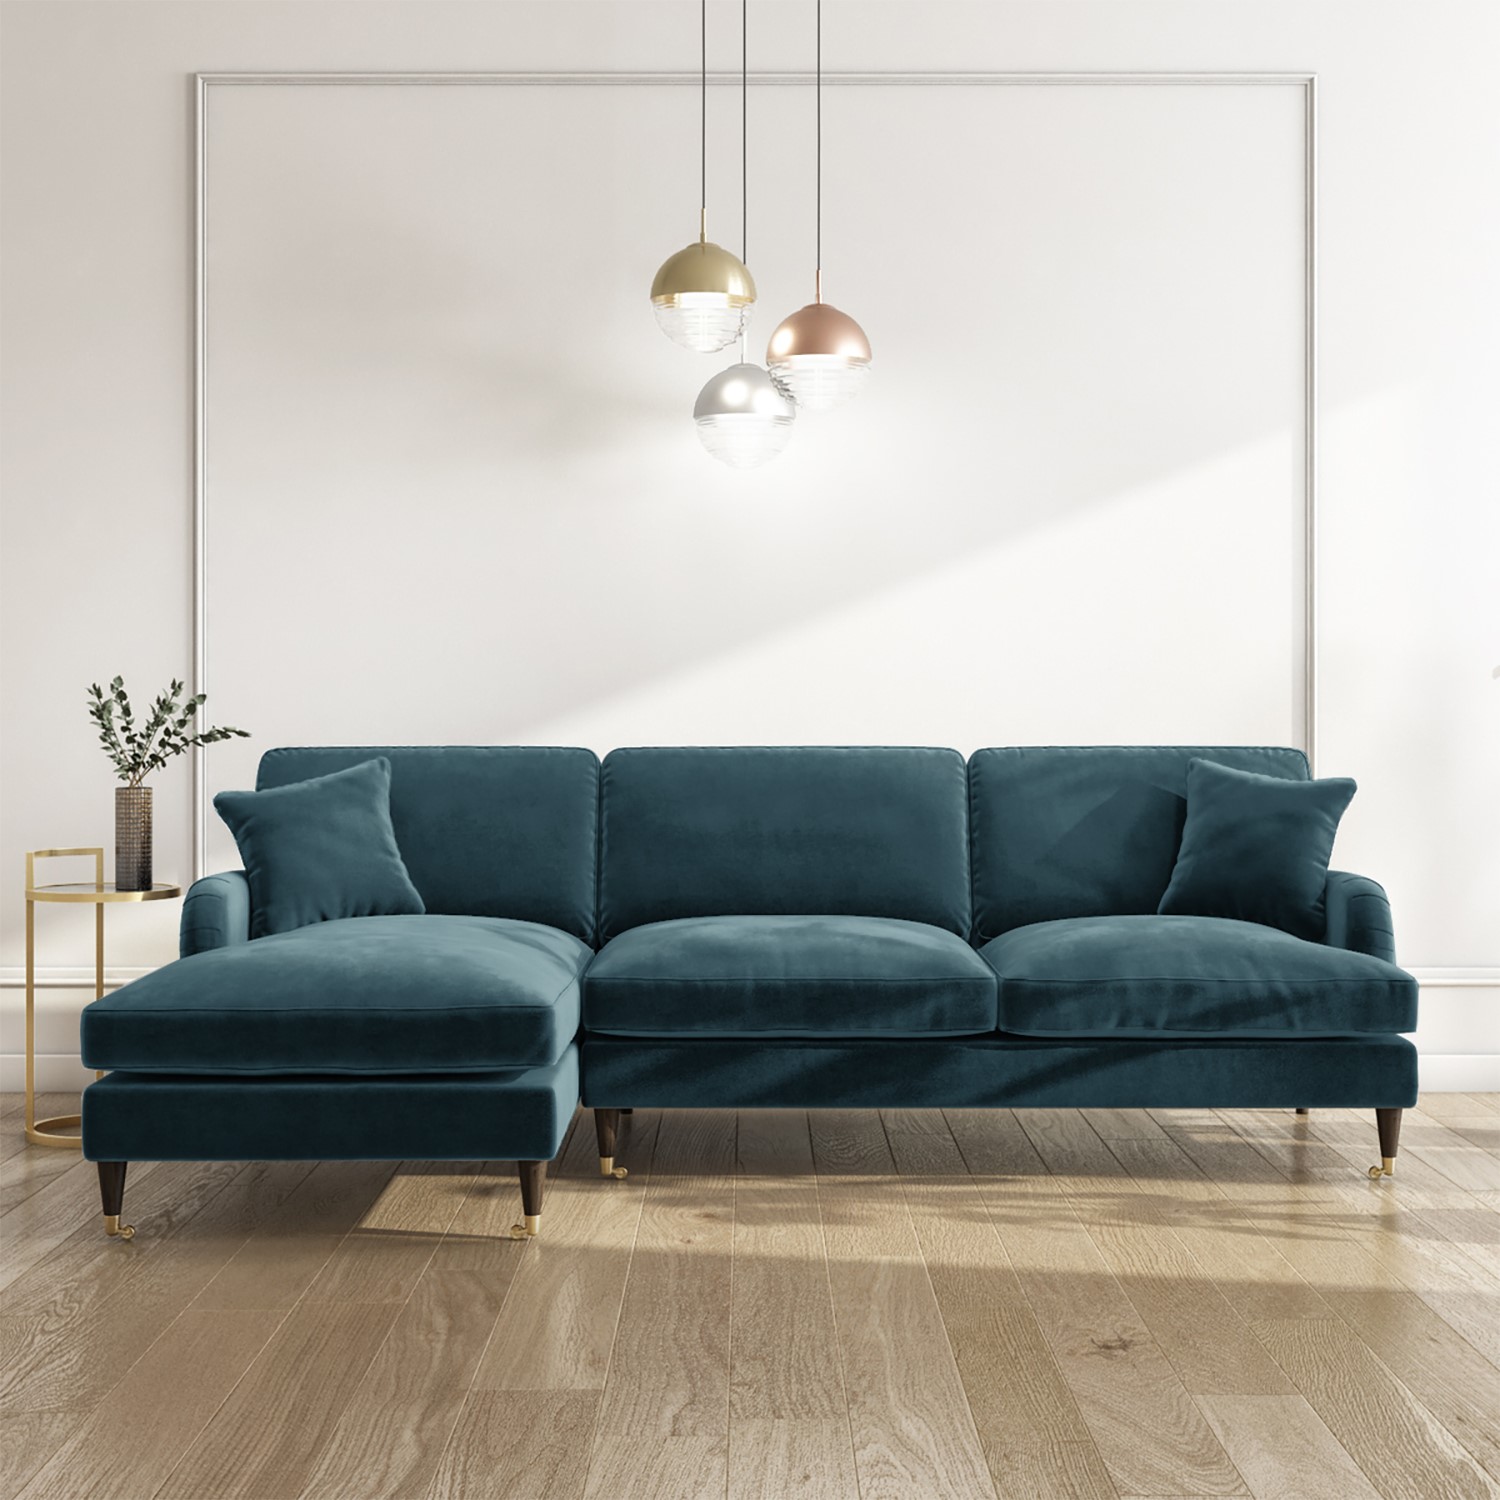 Baan Staat emulsie 4 Seater Left Hand Facing L Shaped Sofa in Petrol Blue Velvet - Payton -  Furniture123